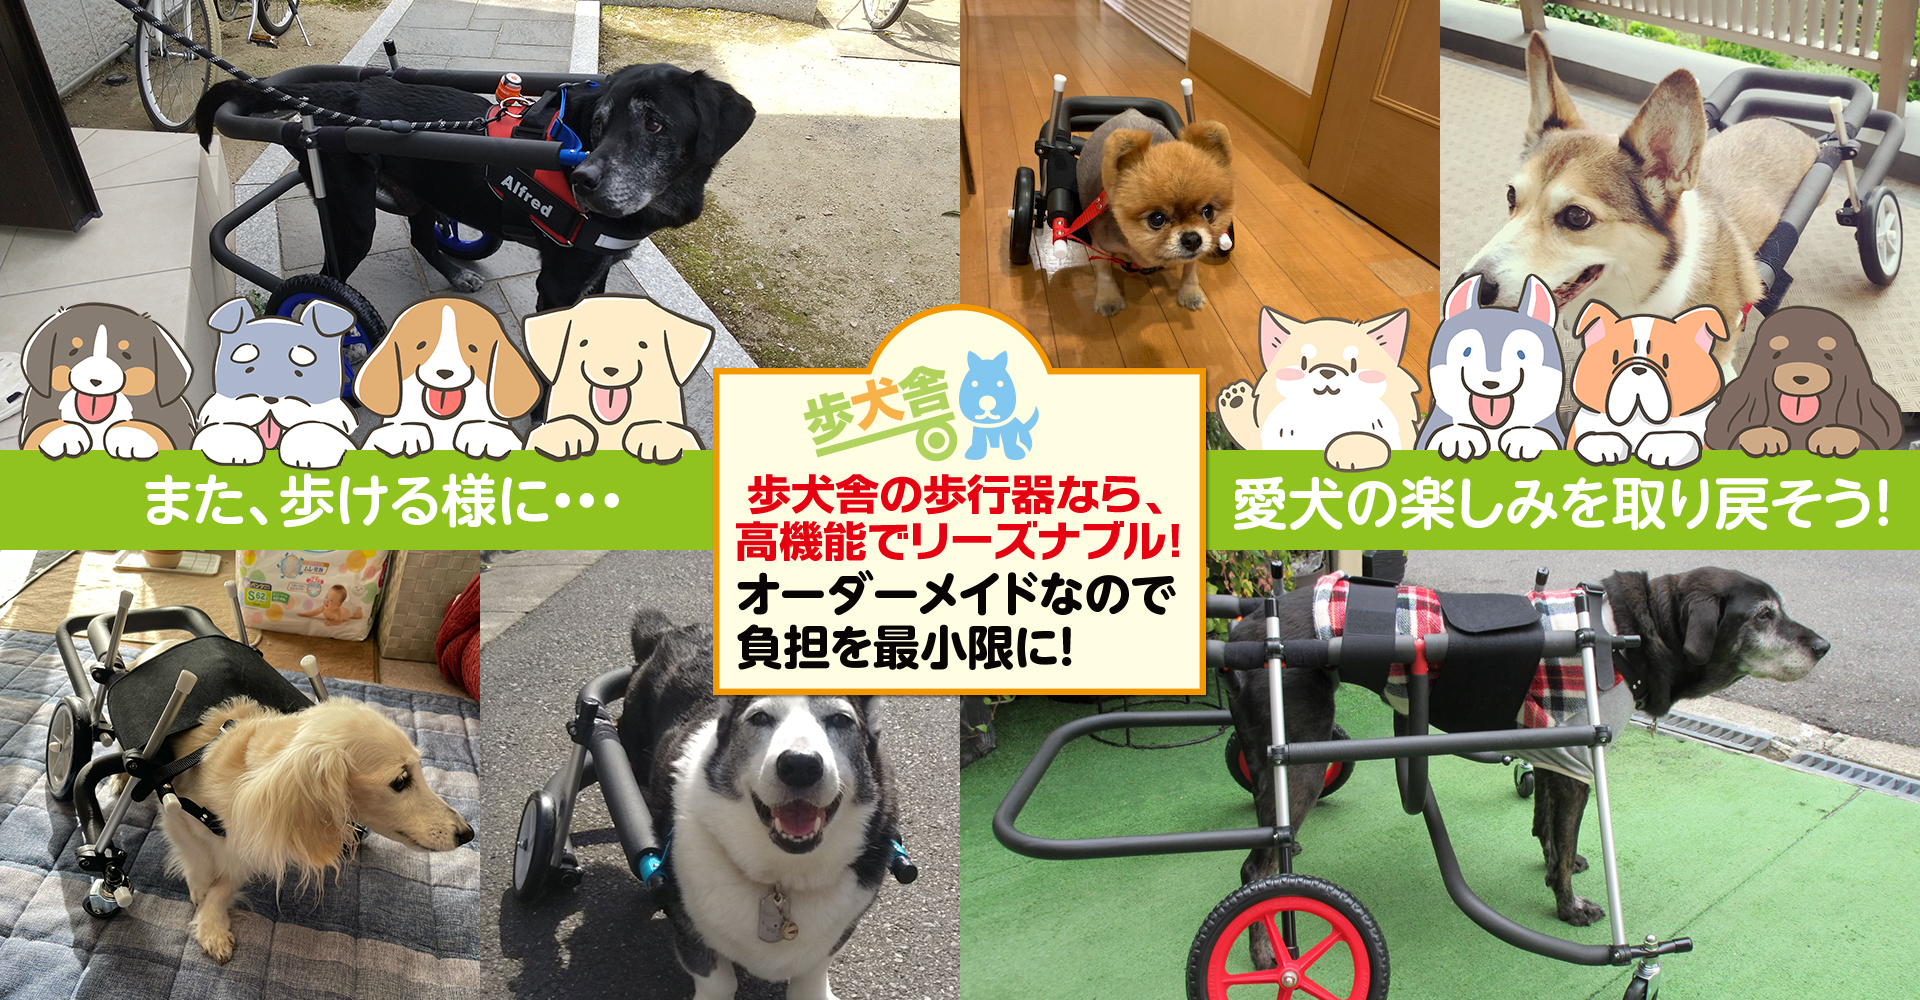 MIX犬4輪歩行器!リハビリ!食事補助!犬の歩行器!介護用!犬用車椅子!